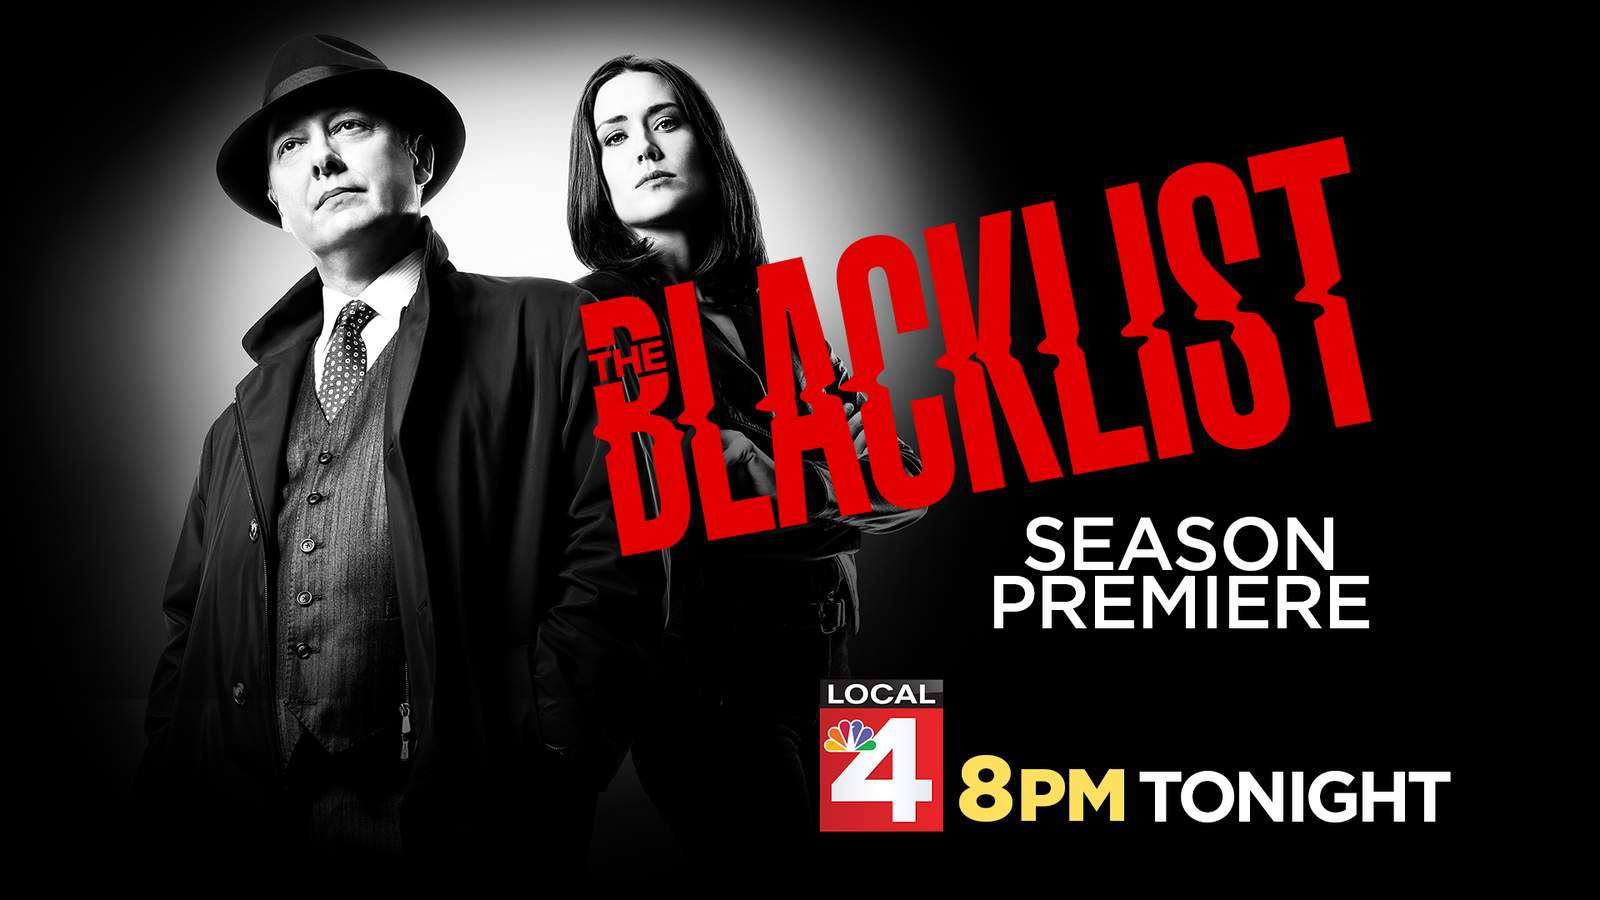 ‘The Blacklist’ Season Premiere